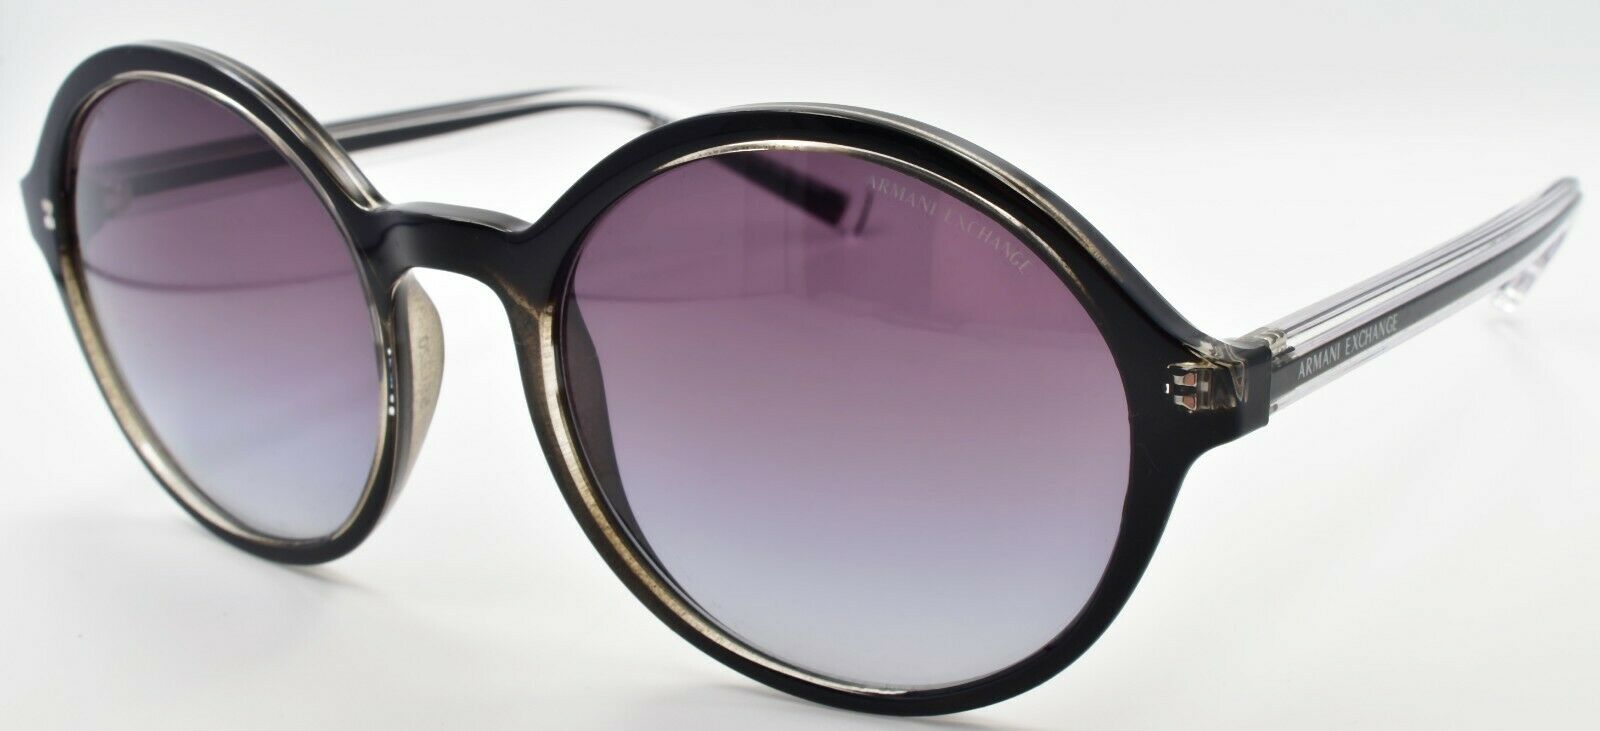 1-Armani Exchange AX4101S 83218G Women's Sunglasses Crystal Grey / Grey Gradient-7895653197220-IKSpecs